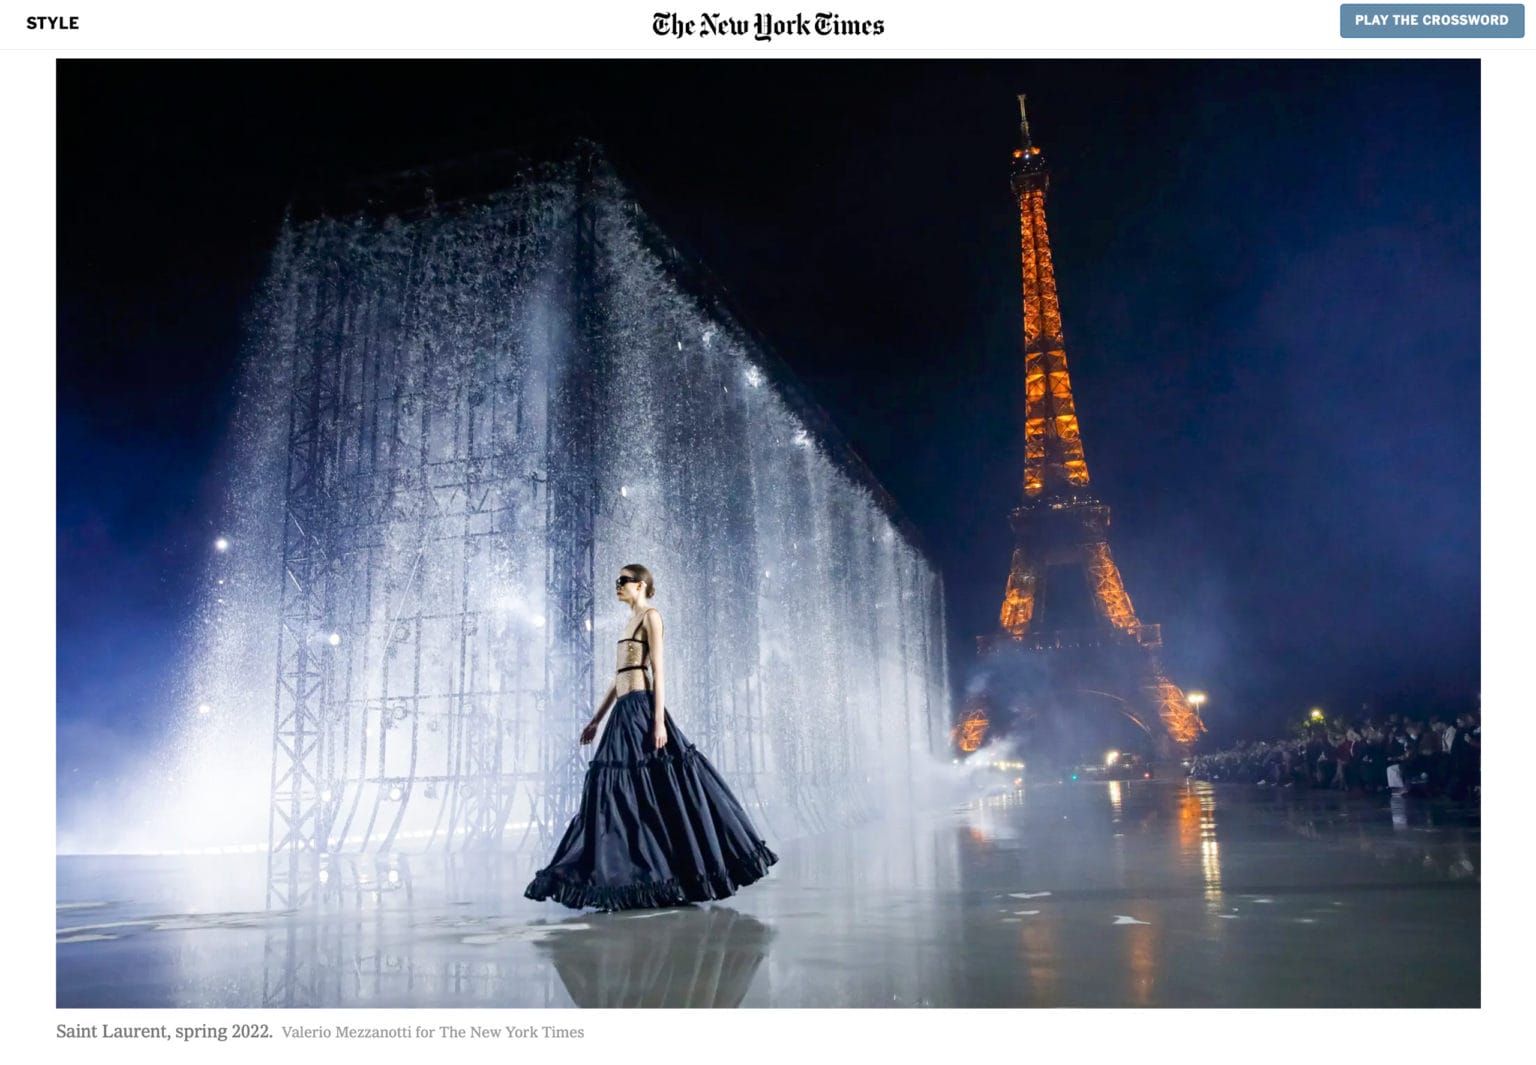 Saint Laurent Fashion Show, Photo by Valerio Mezzanotti for The New York Times